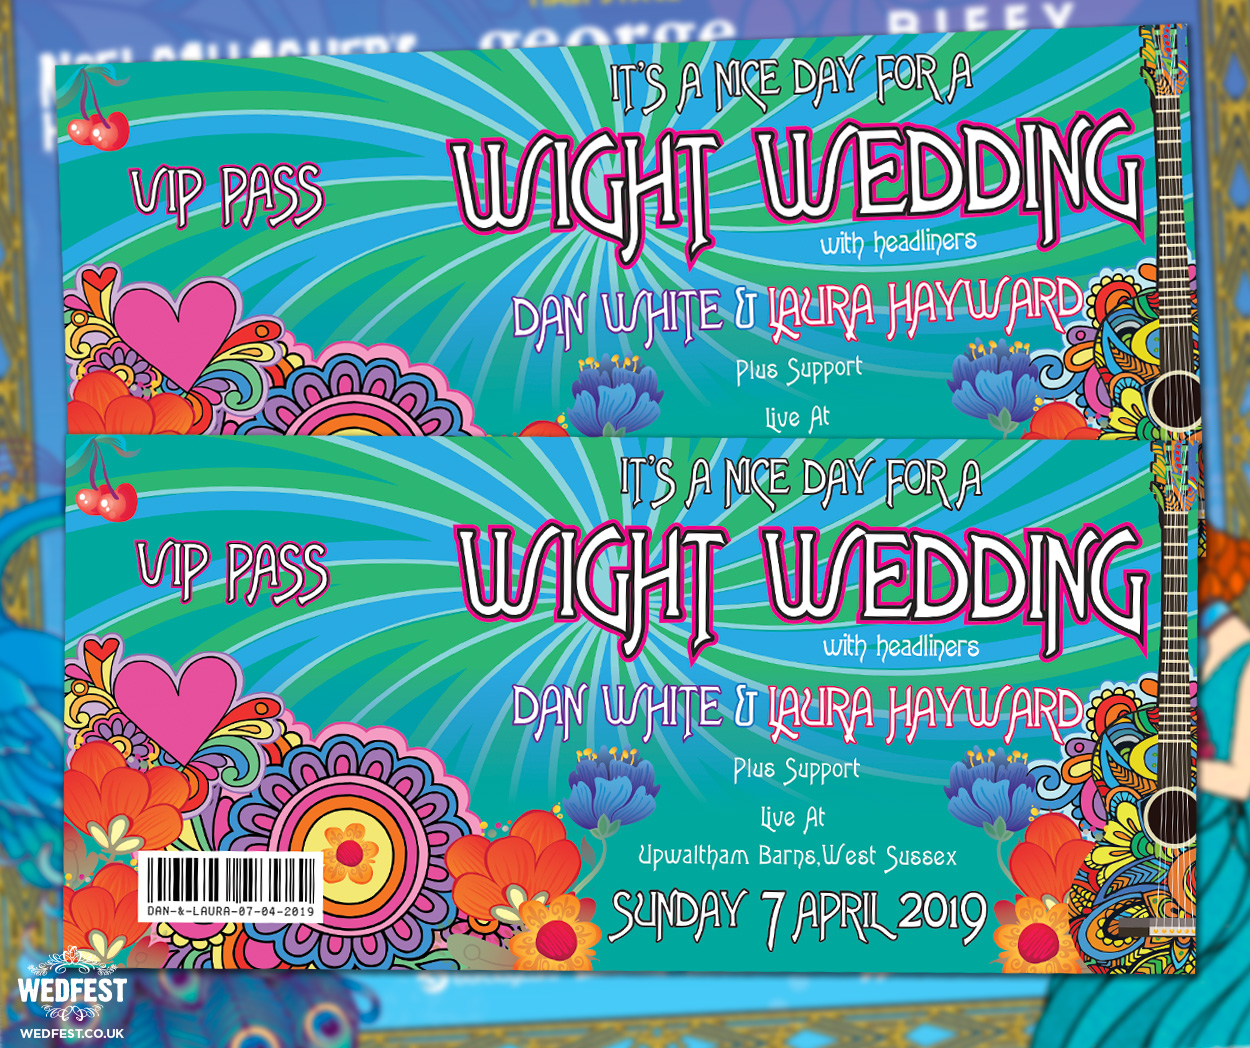 isle of wight festival themed wedding invites